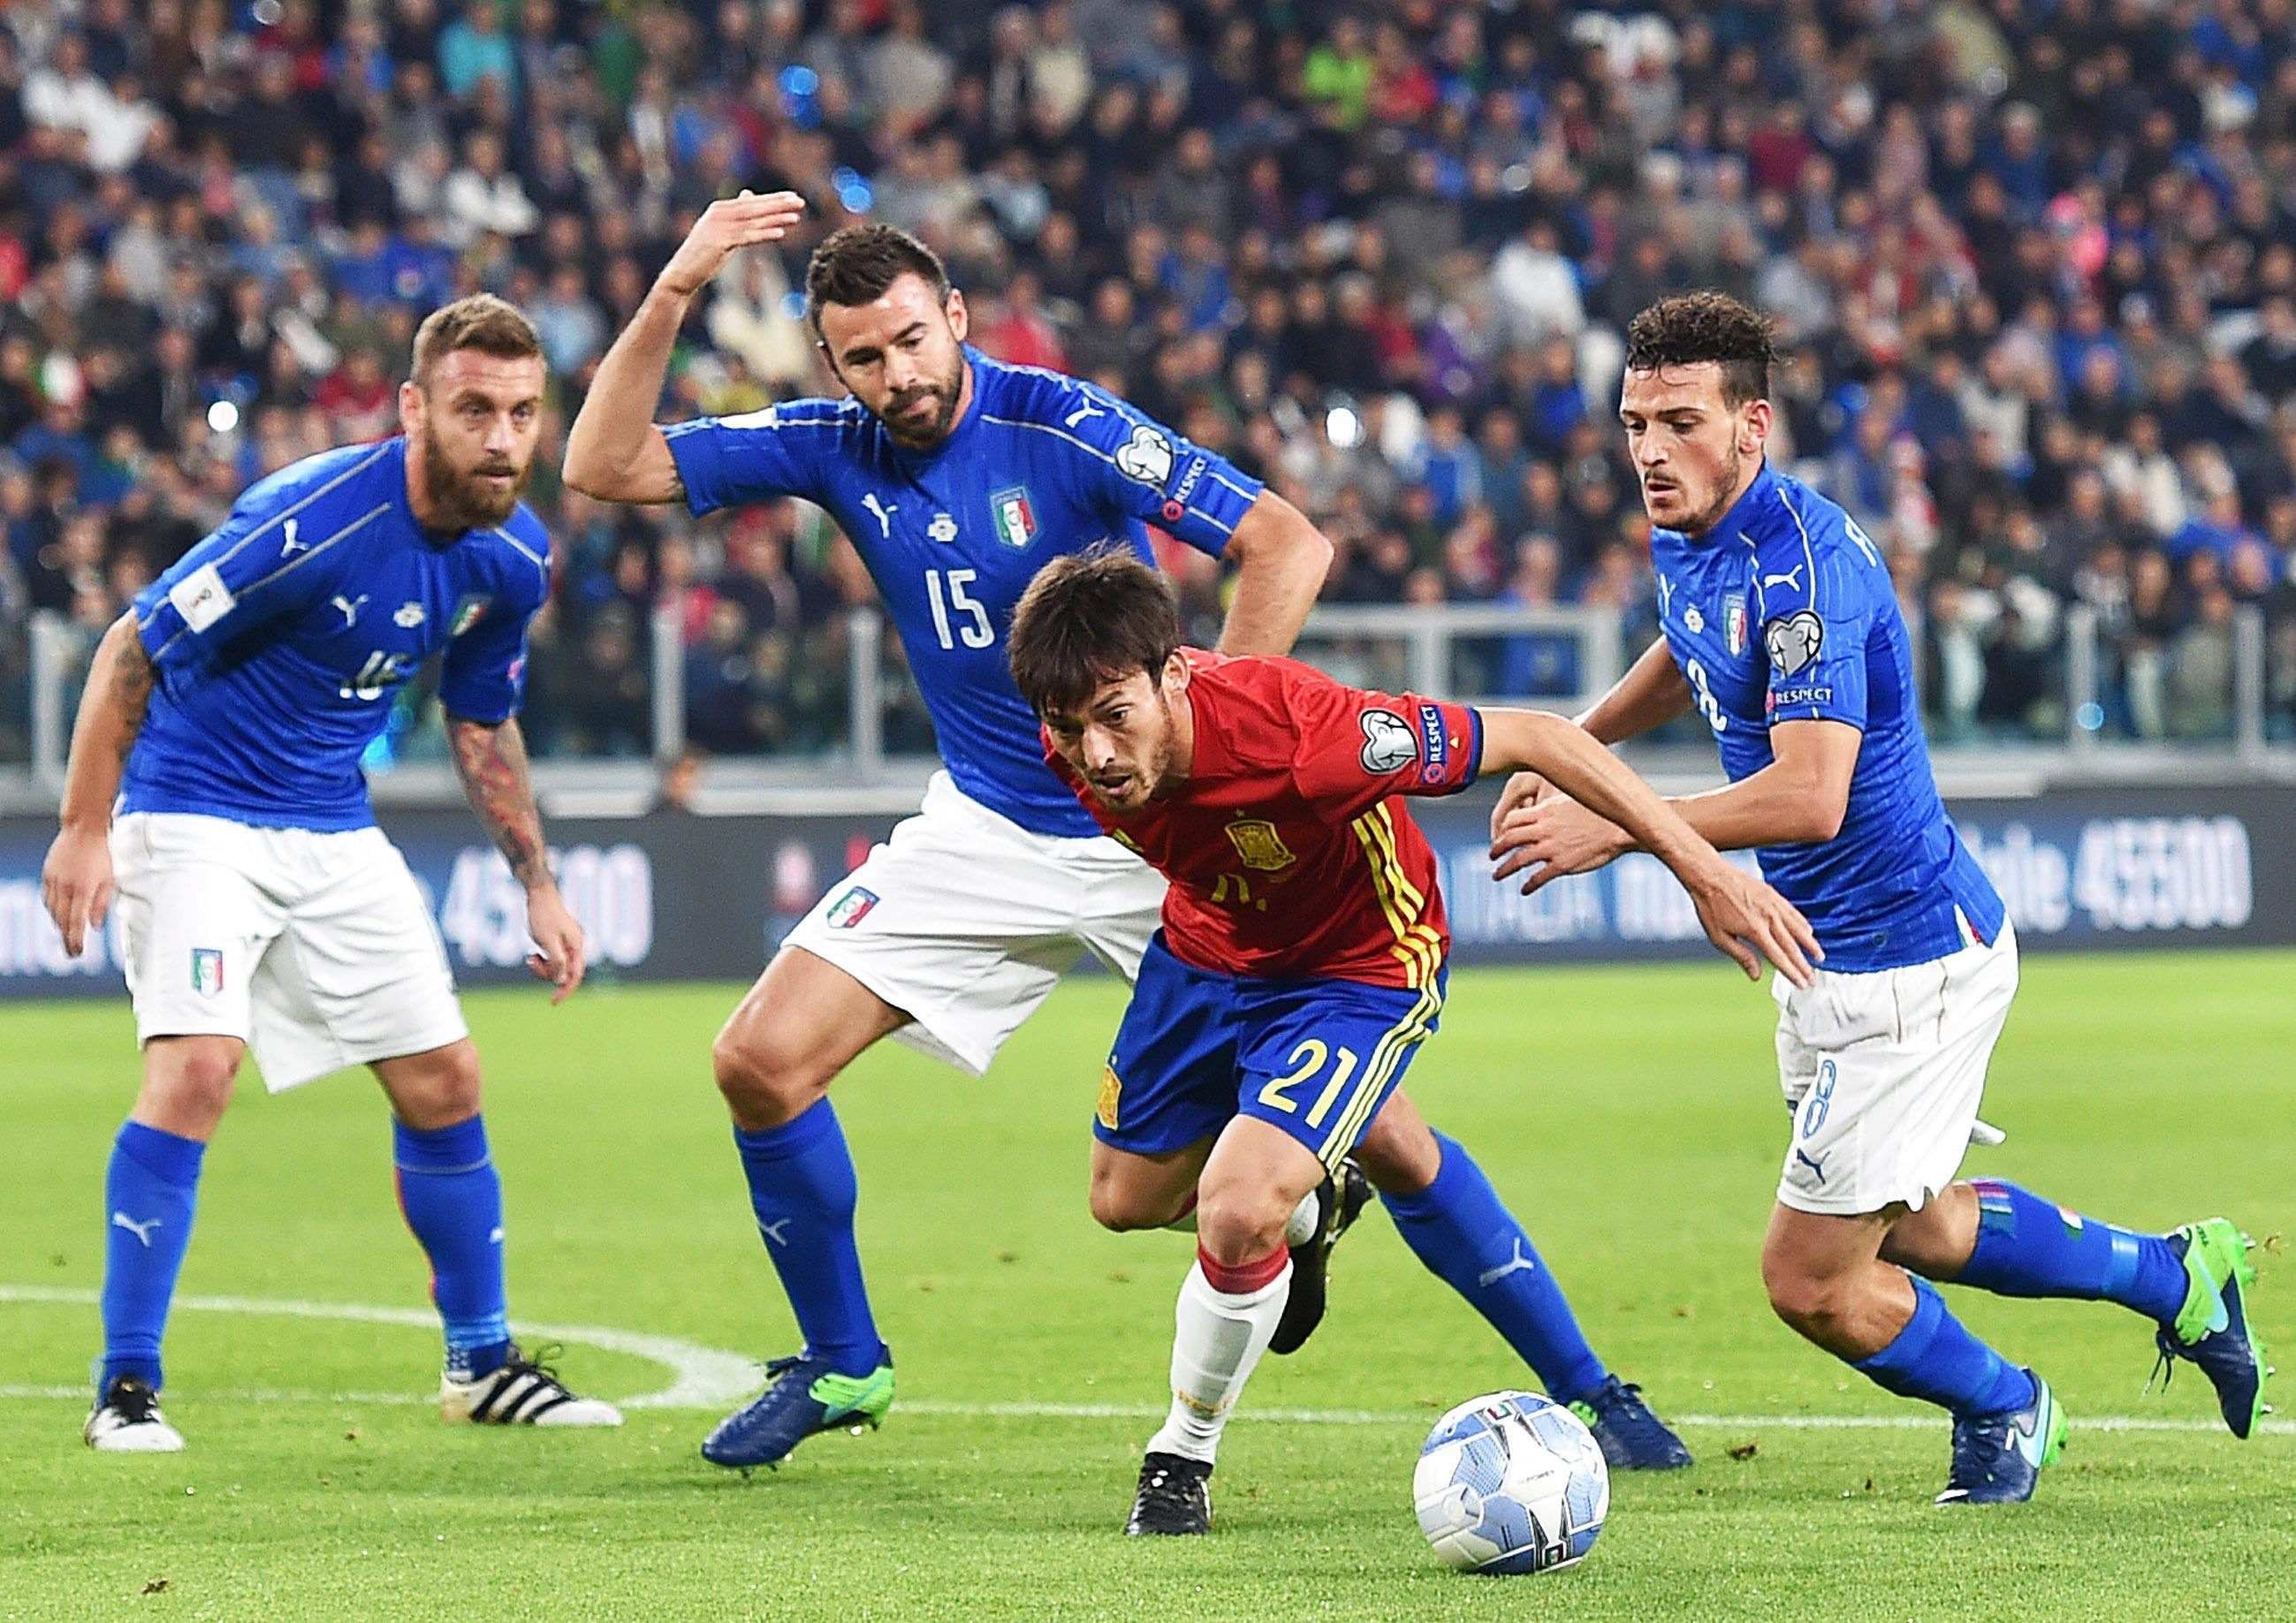 Un penalti de Ramos le da el empate a Italia (1-1)